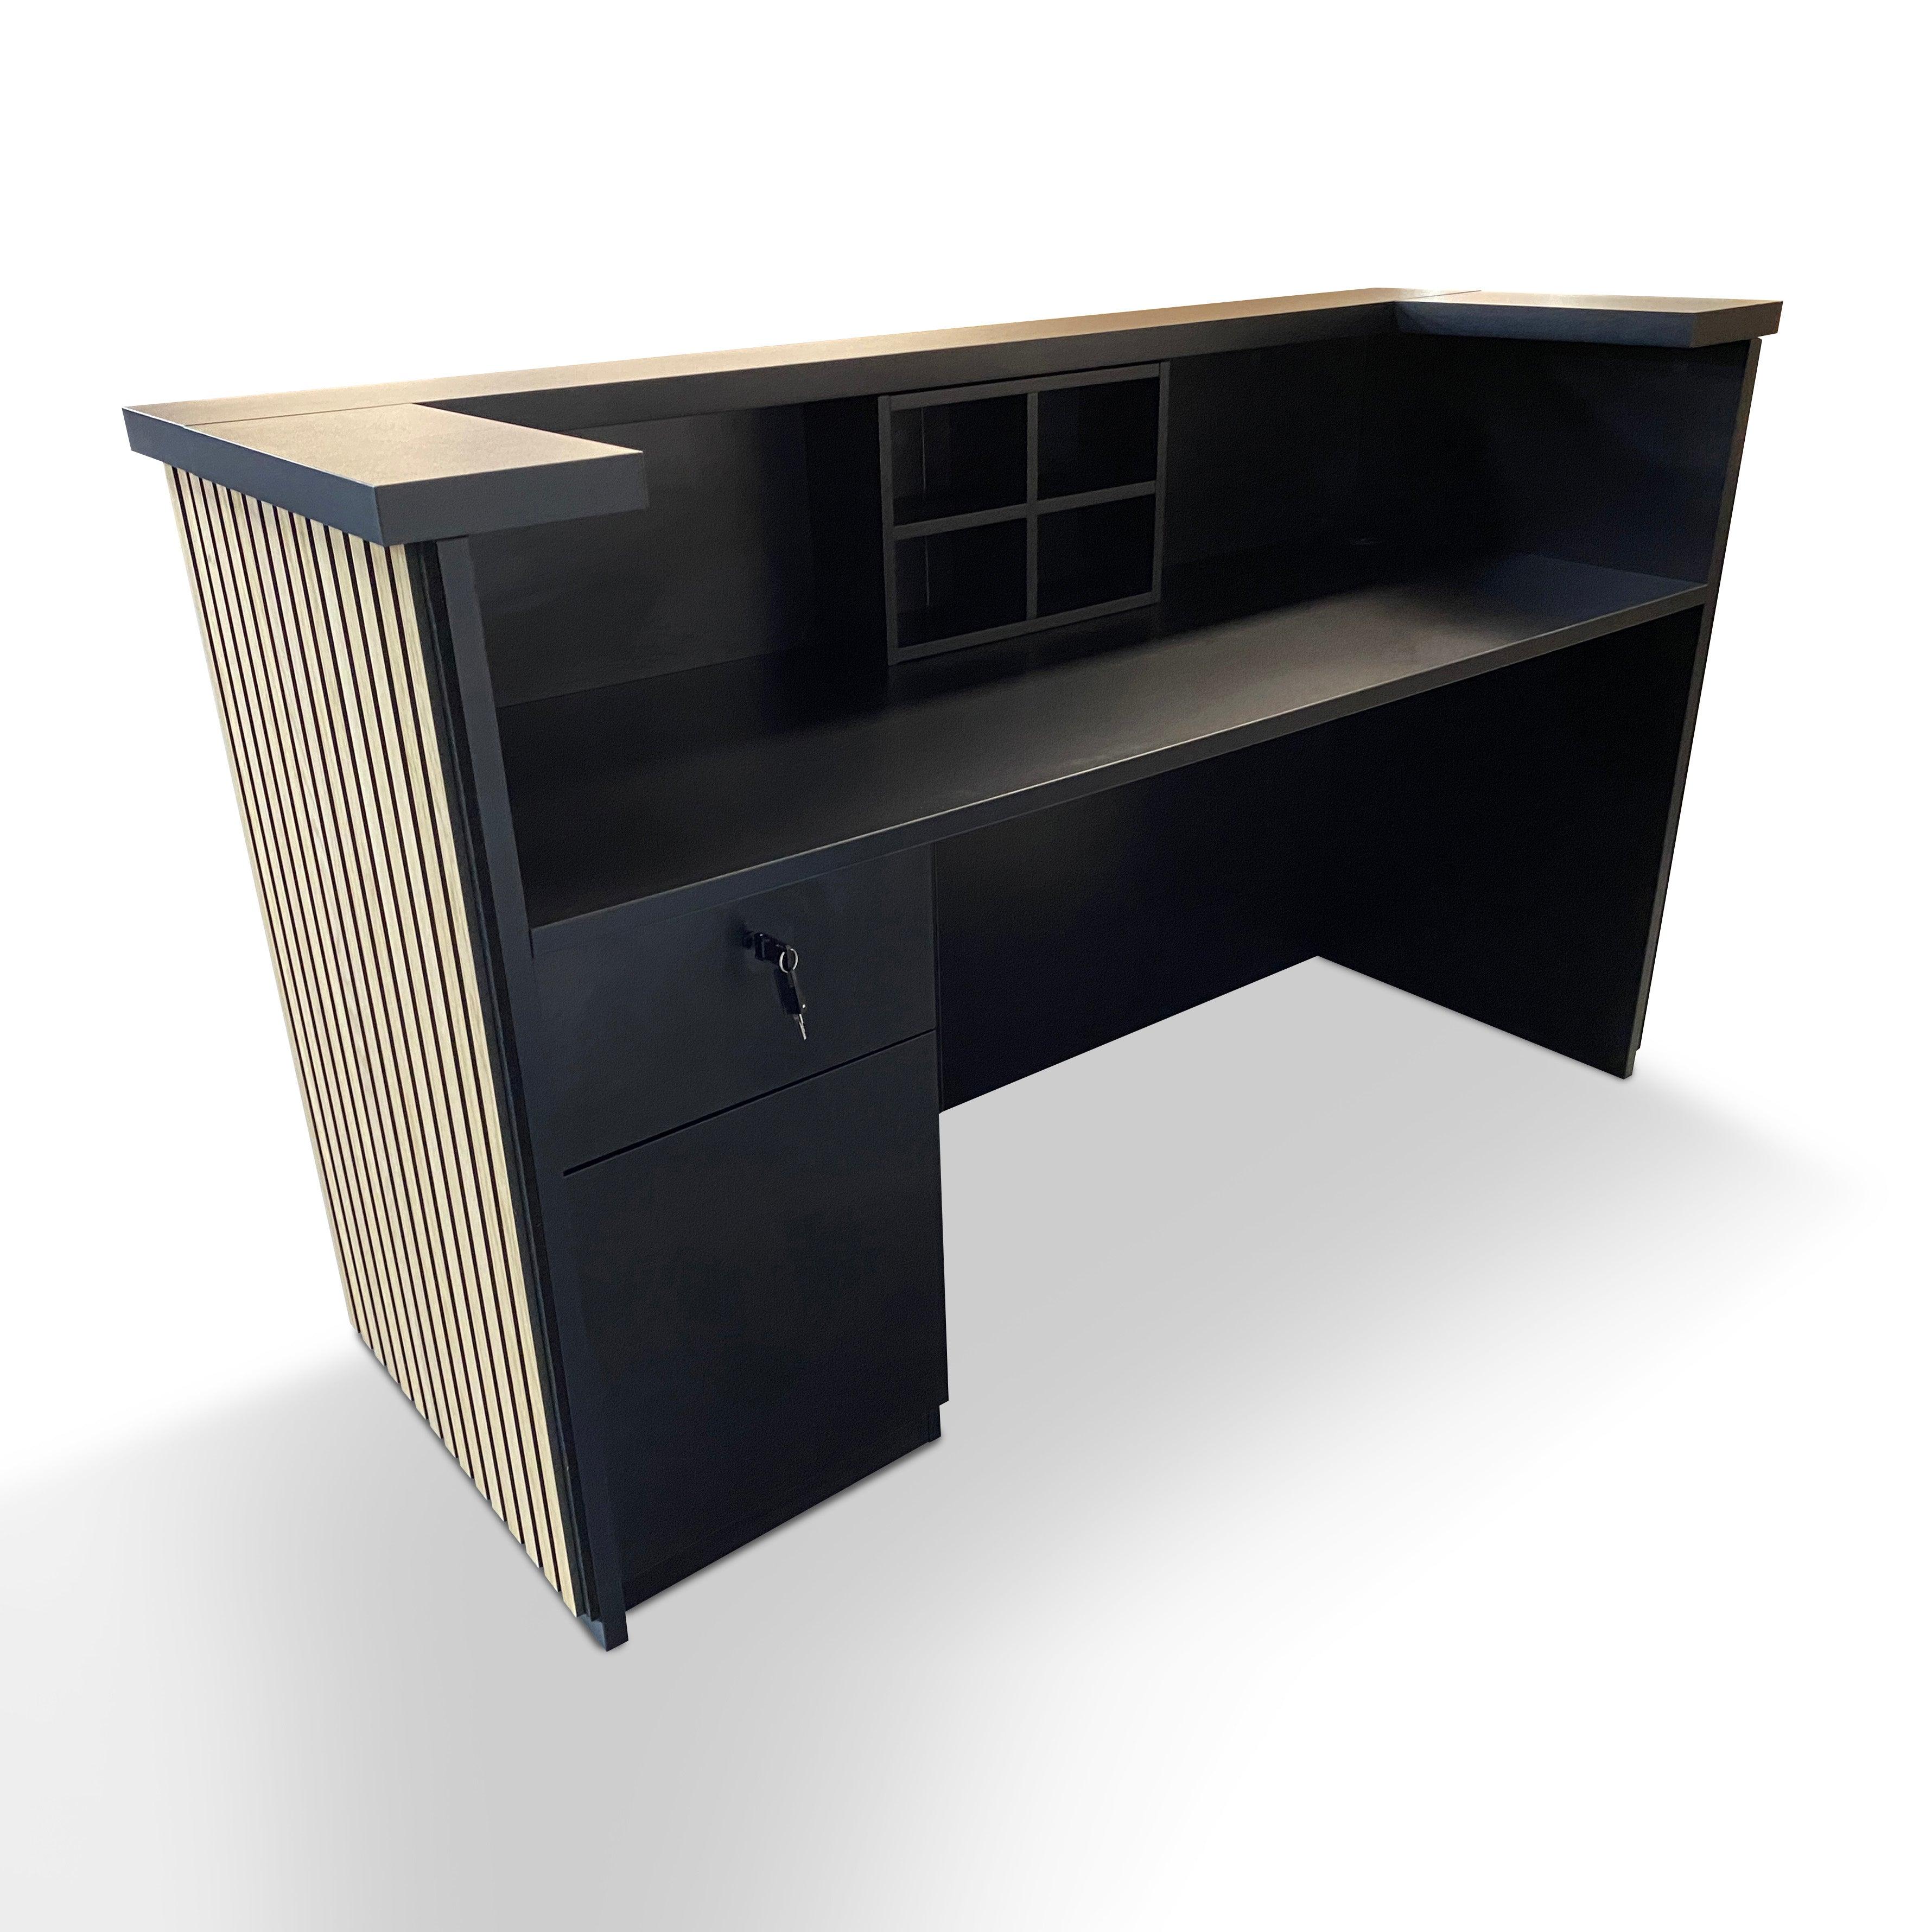 KENTO Reception Desk 180cm - Timber Slat Acoustic Black & Oak - Furniture Castle